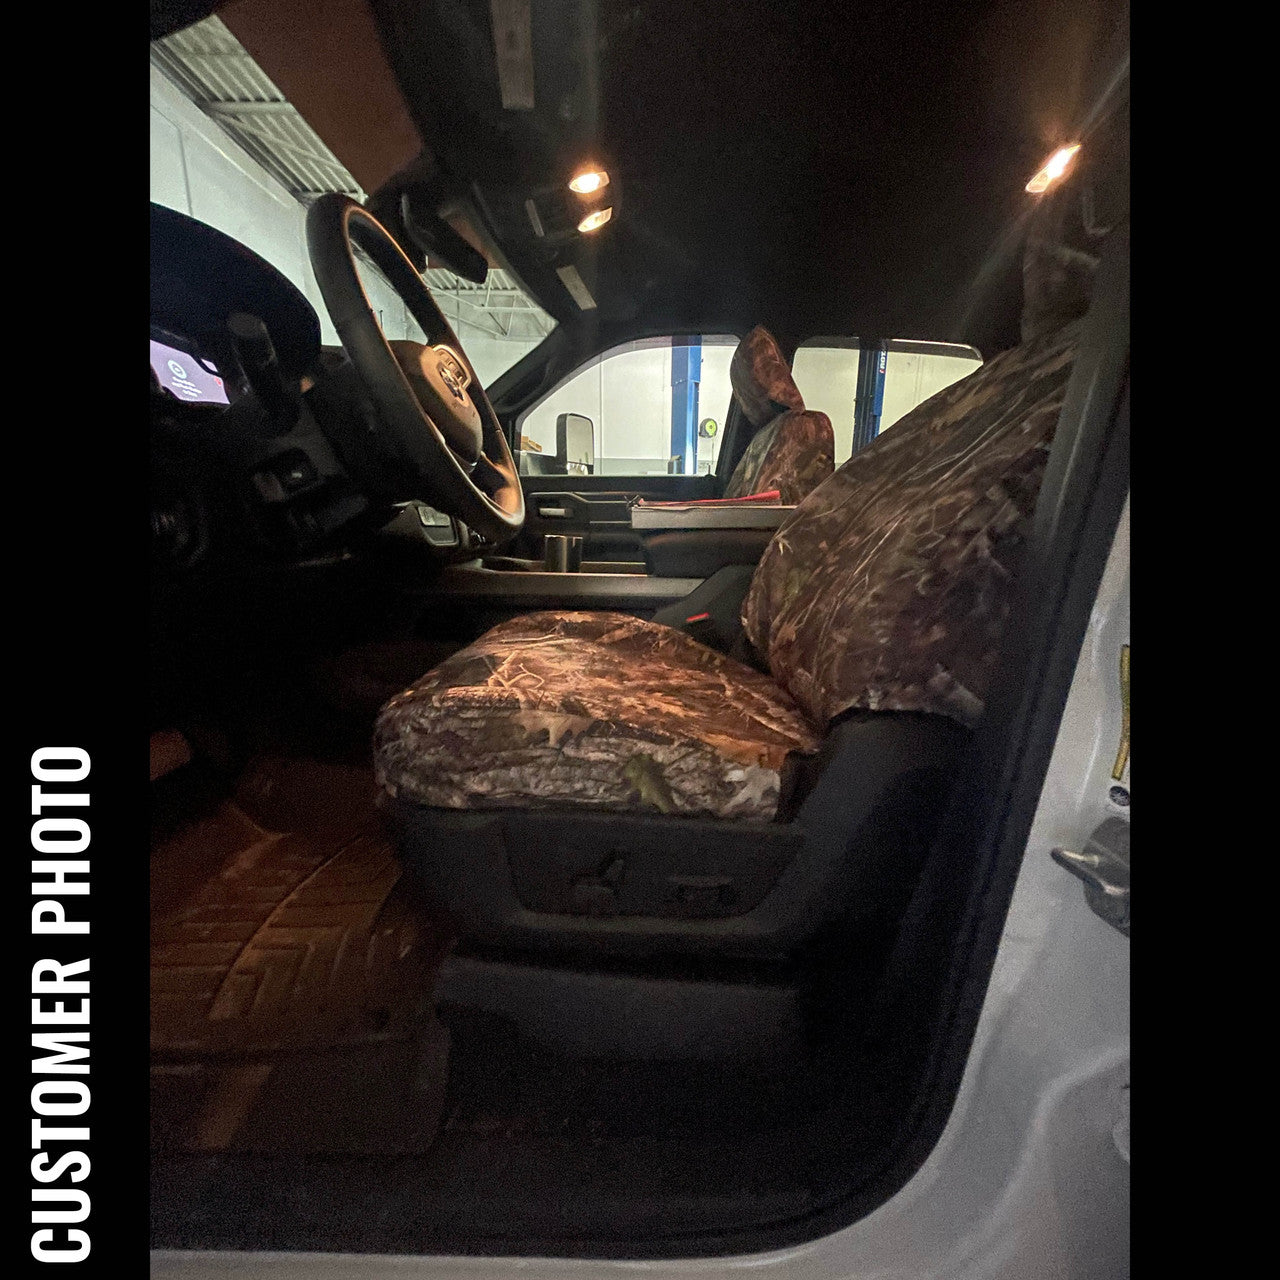 TigerTough seat covers for a RAM truck in Kanati Camo